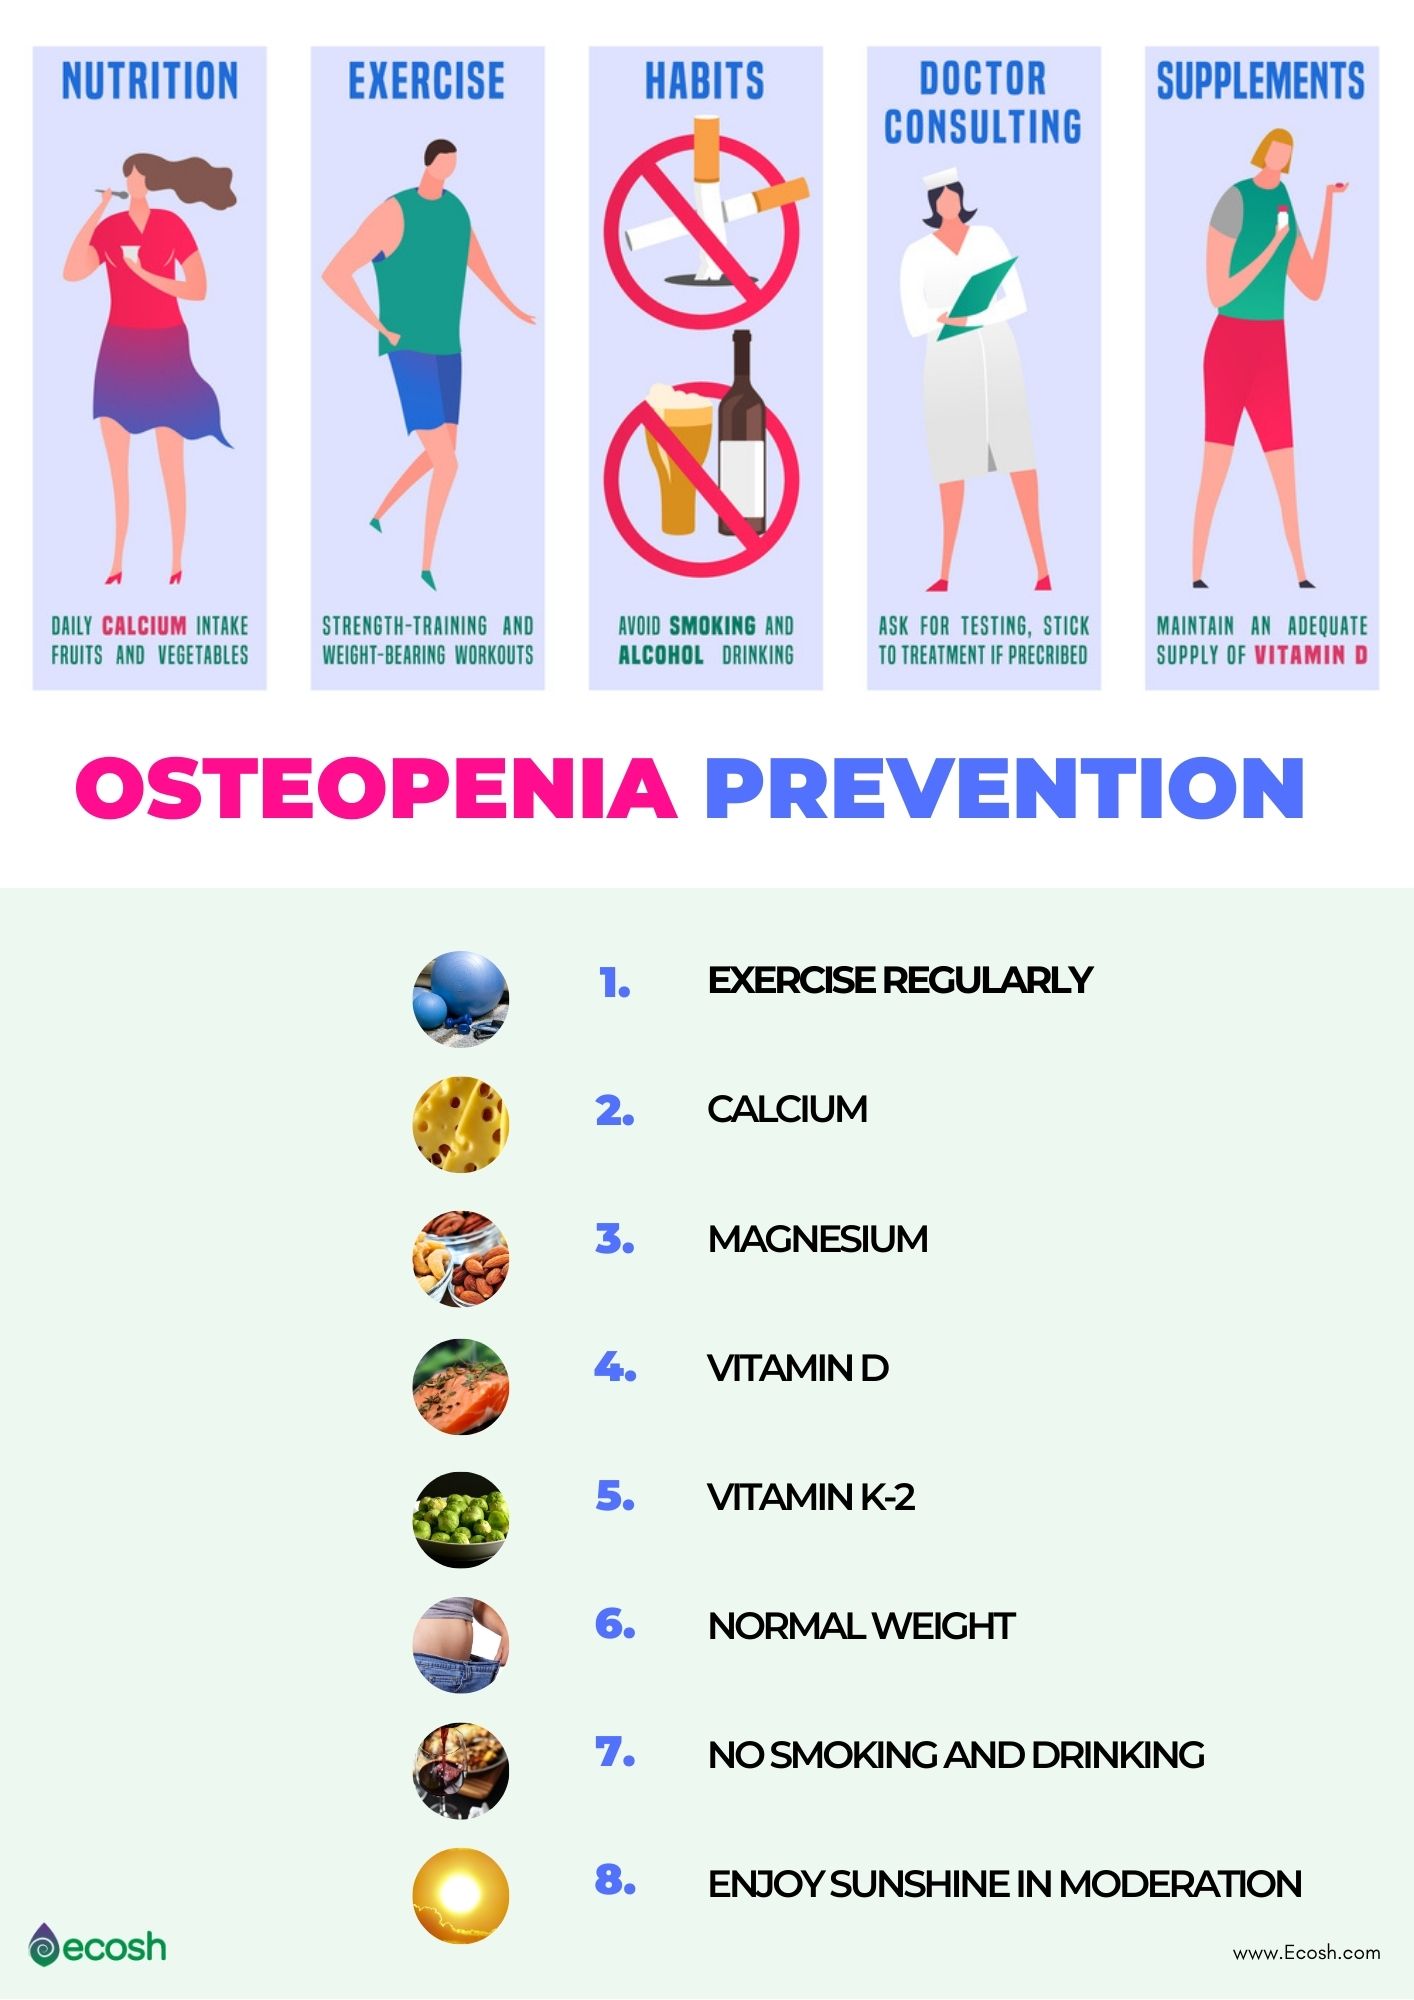 Ecosh_Osteopenia_Prevention_Osteopenia_Treatment_Osteopenia_and_Vitamin_D